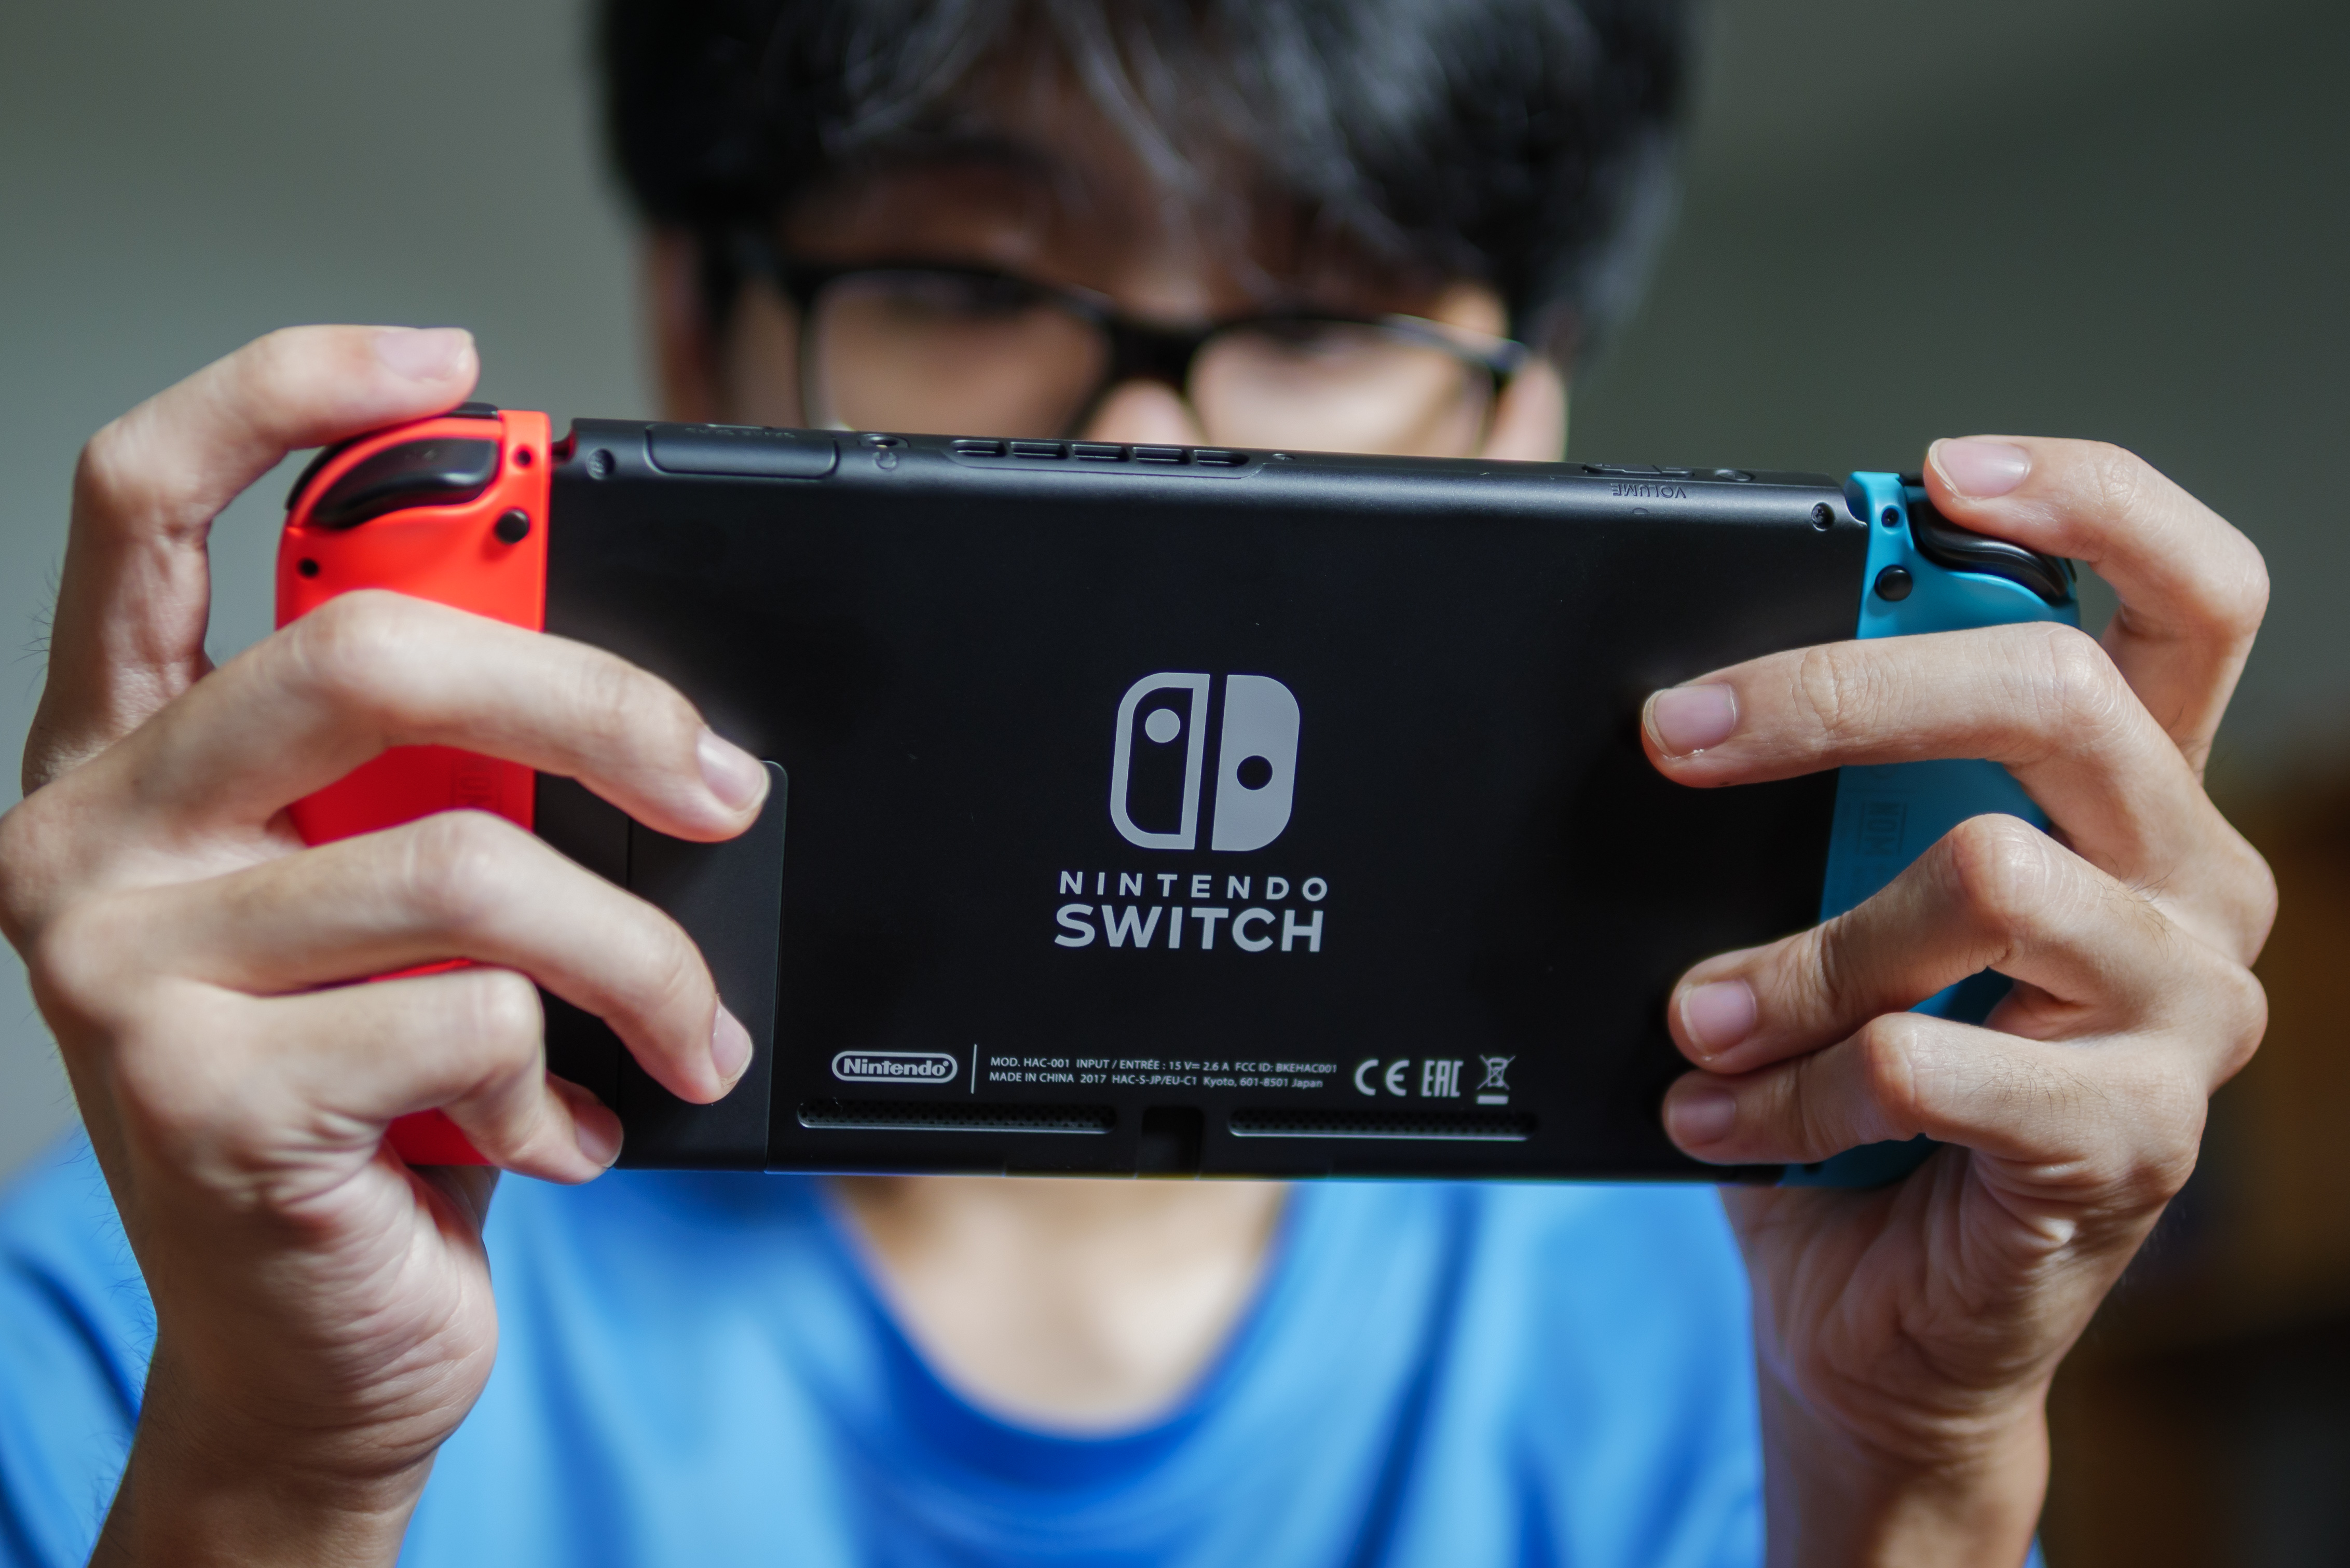 Kid wearing a blue shirt playing a Nintendo Switch